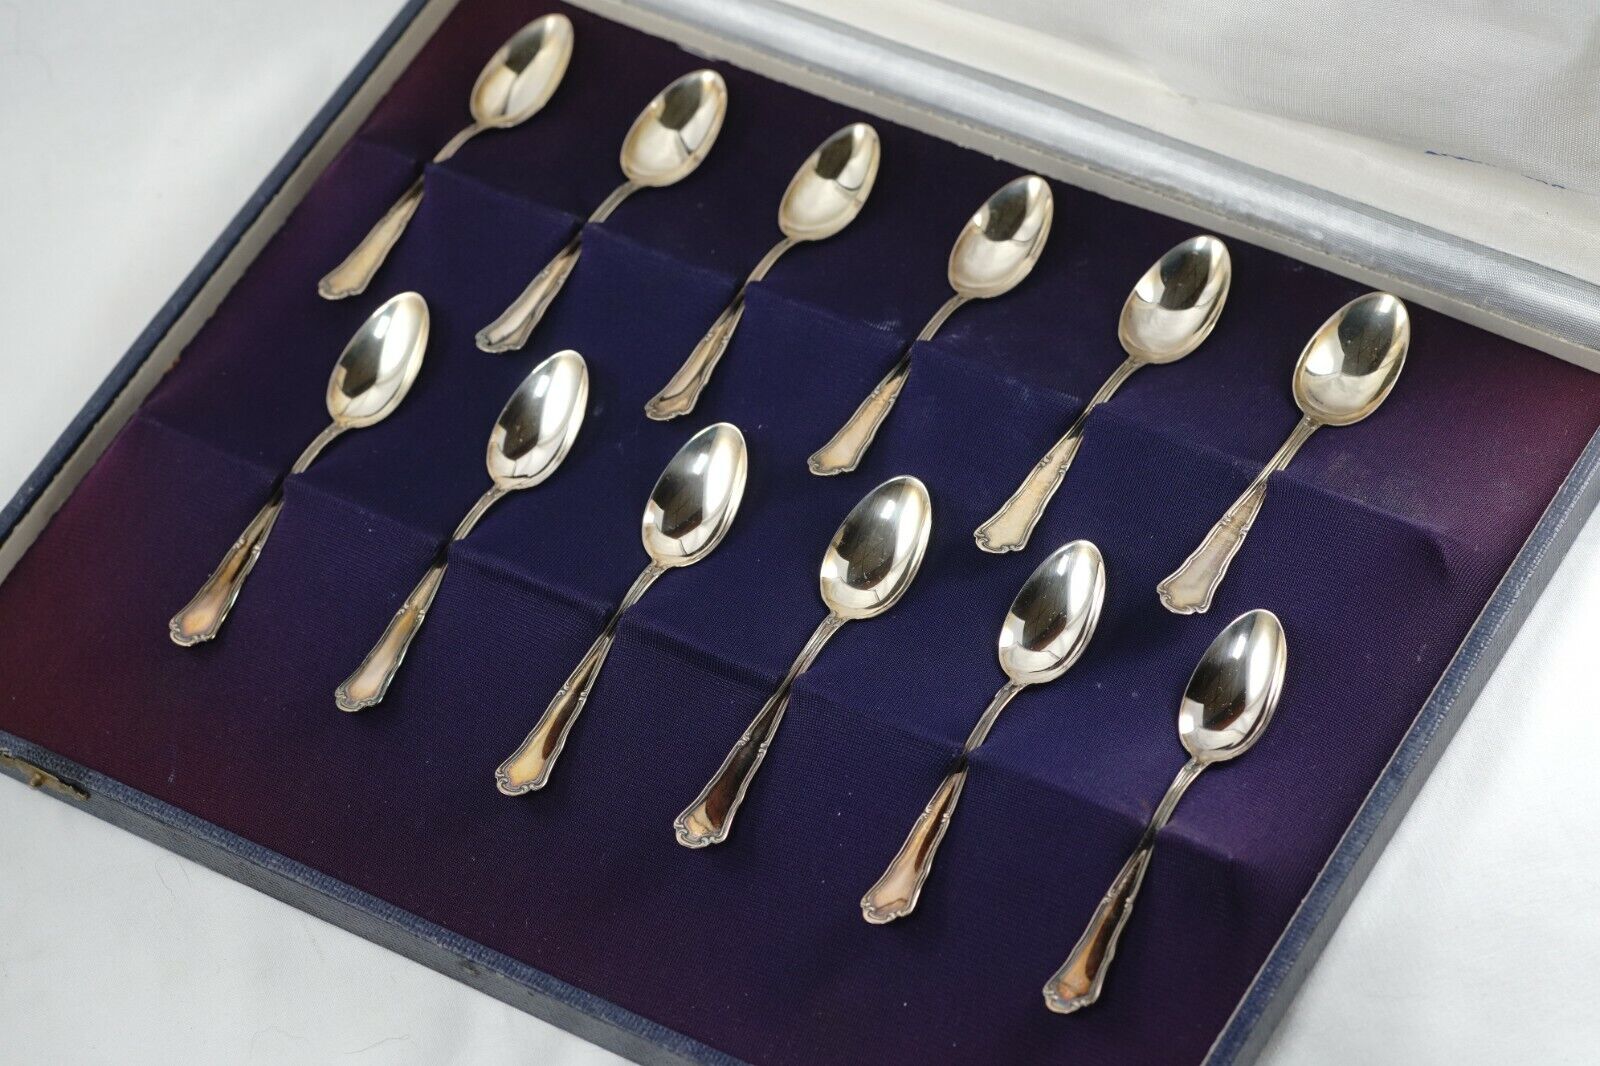 Gambacurta Roma Argento 800 Silver Espresso Spoon Set, 12 x 4 Inch Silver Spoons